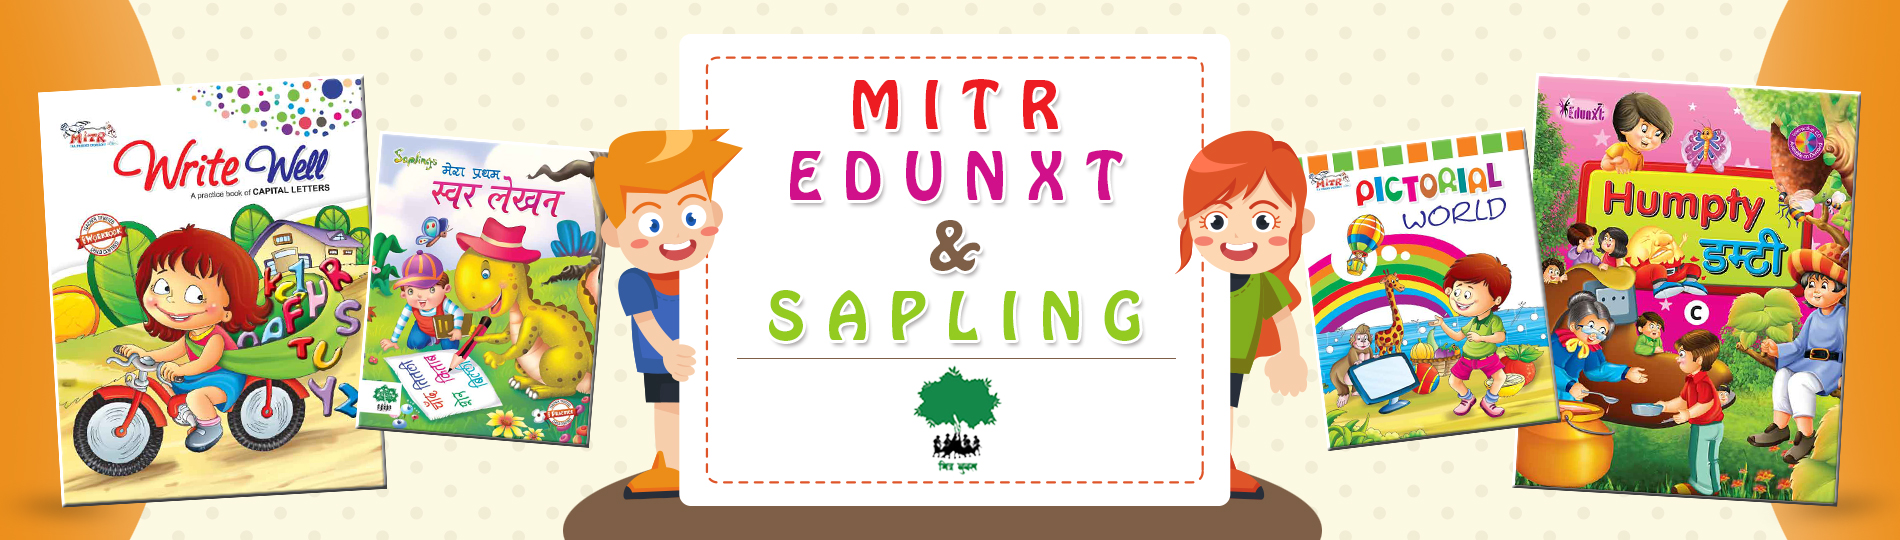 Mitr, Edunxt and Saplings